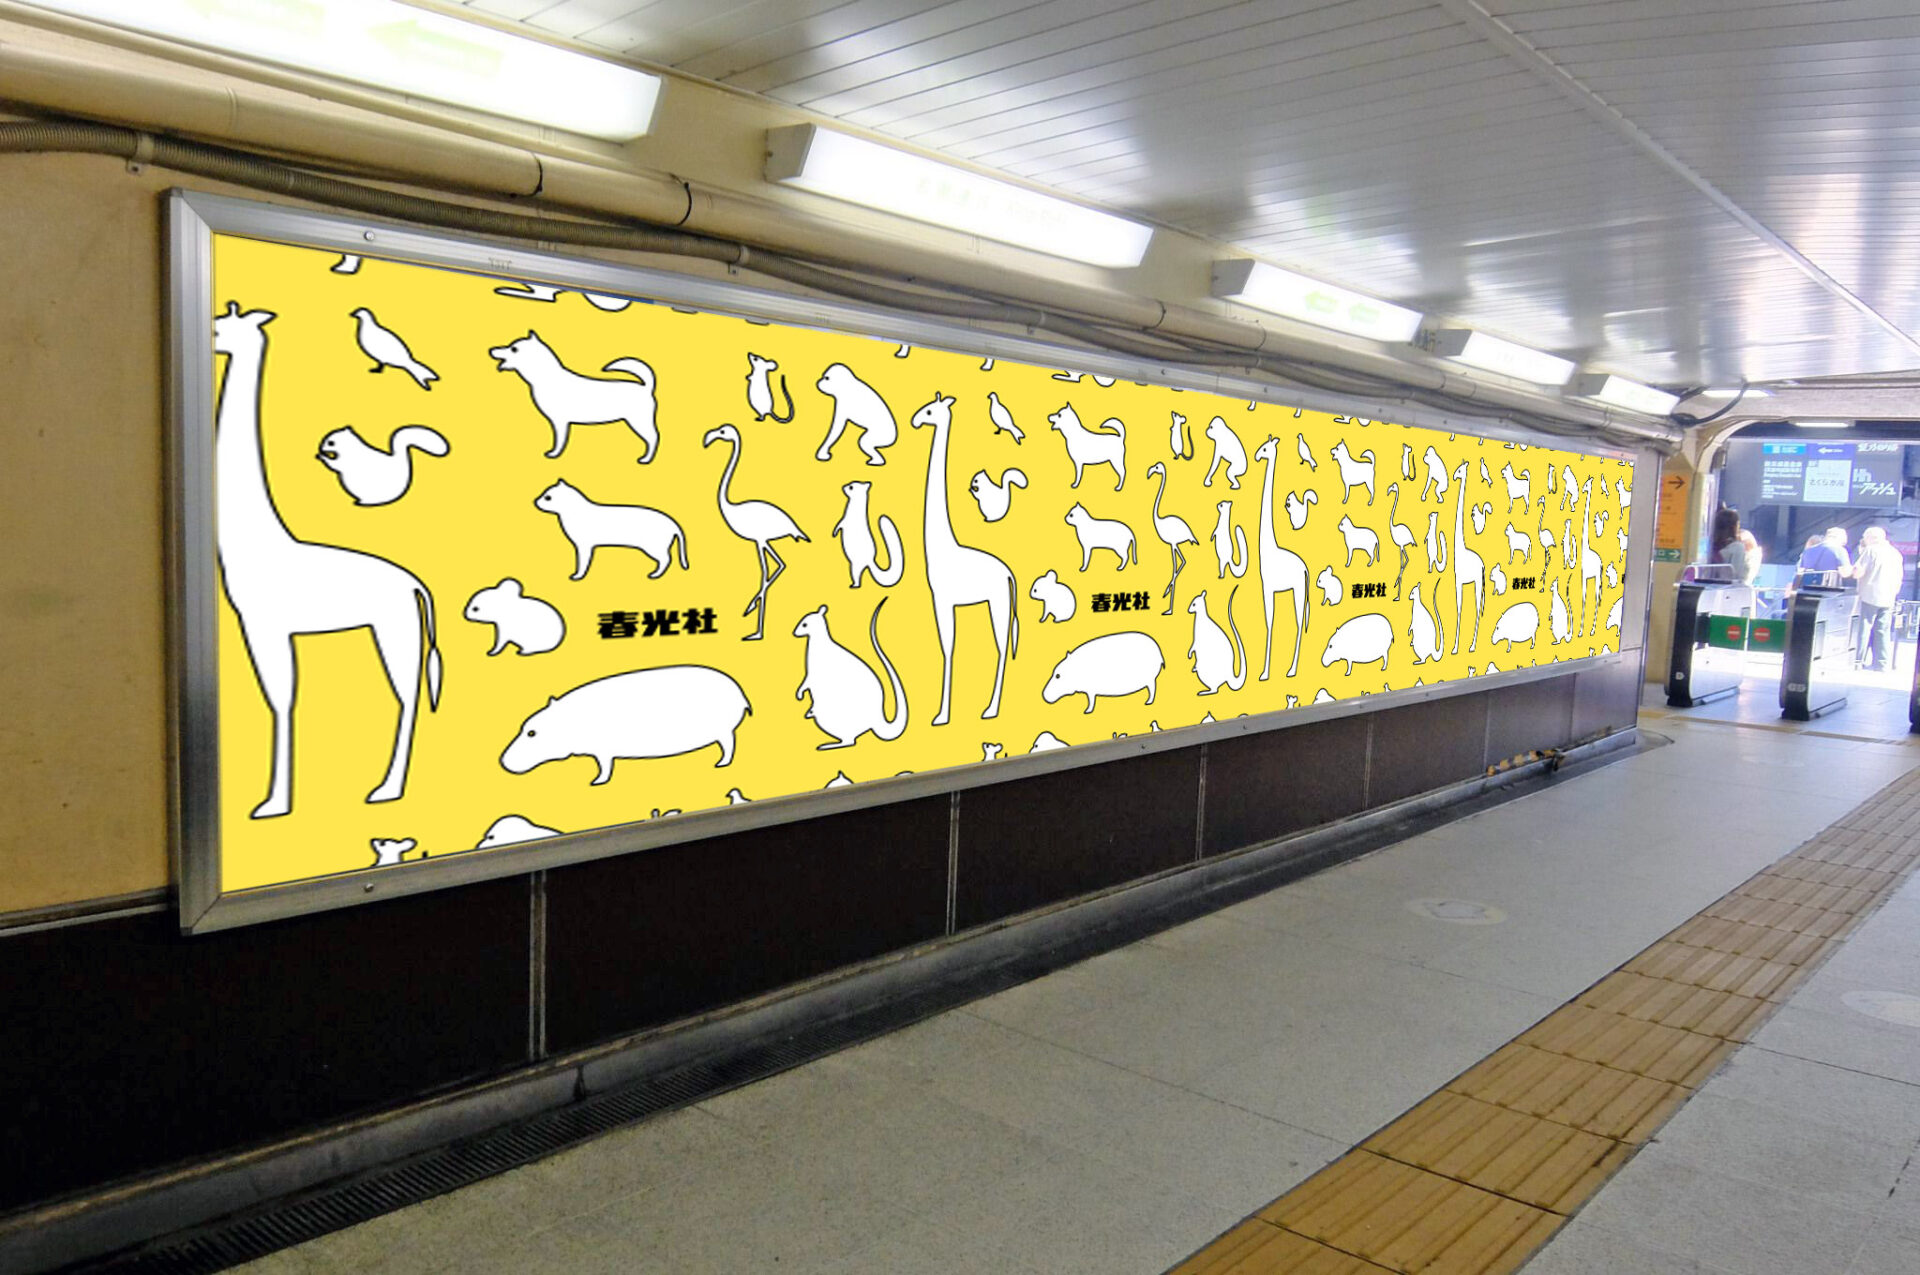 JR東日本原宿駅竹下口改札通路に設置されているポスターセット